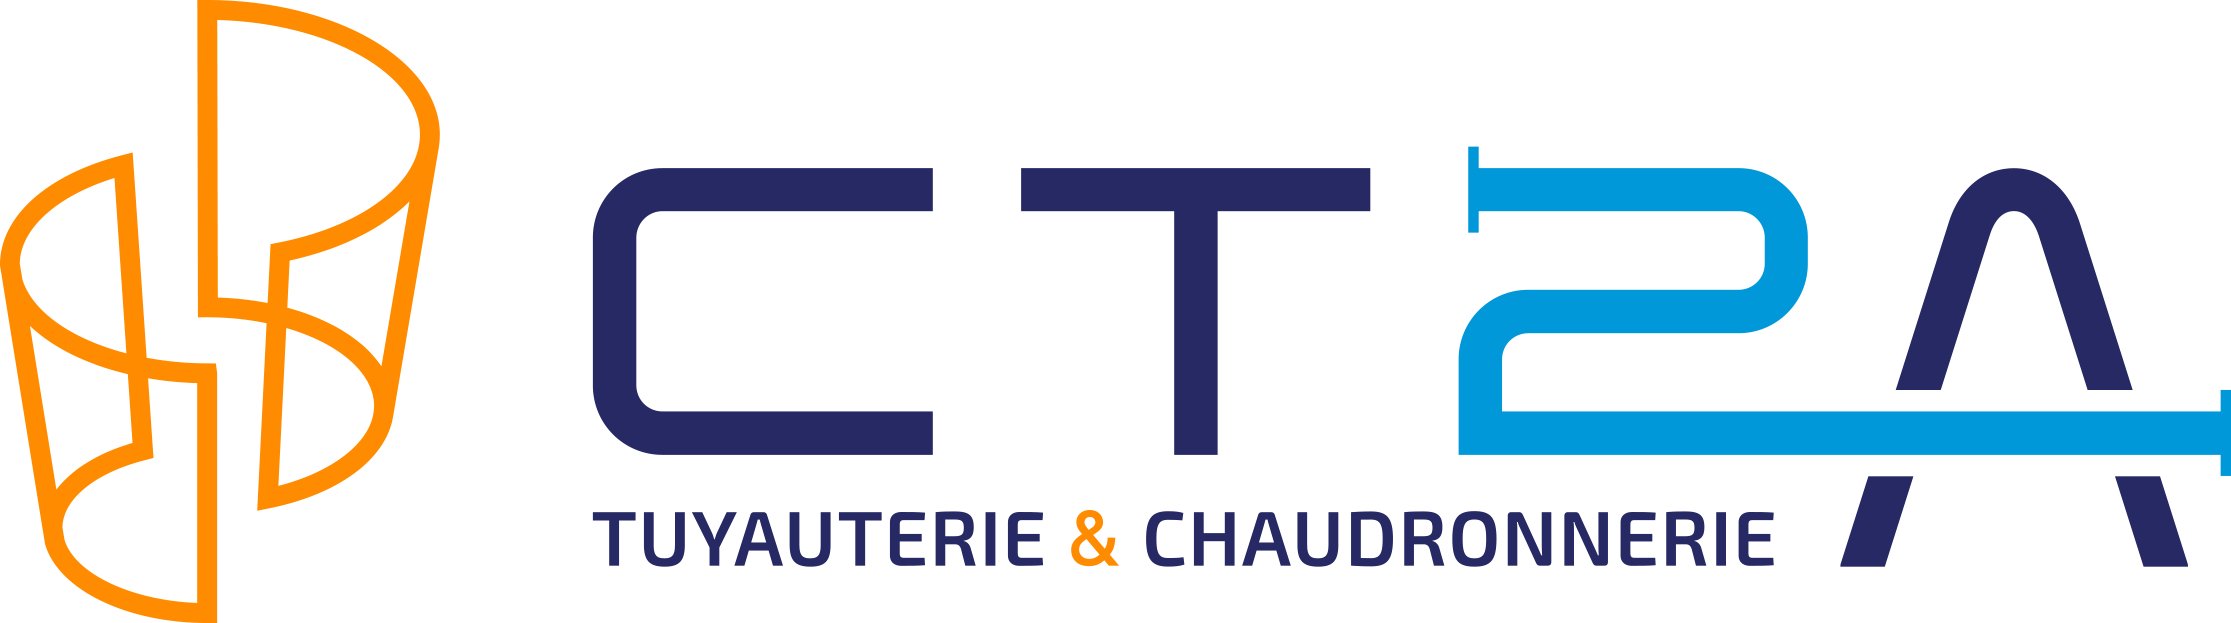 CT2A - Tuyauterie & Chaudronnerie inox